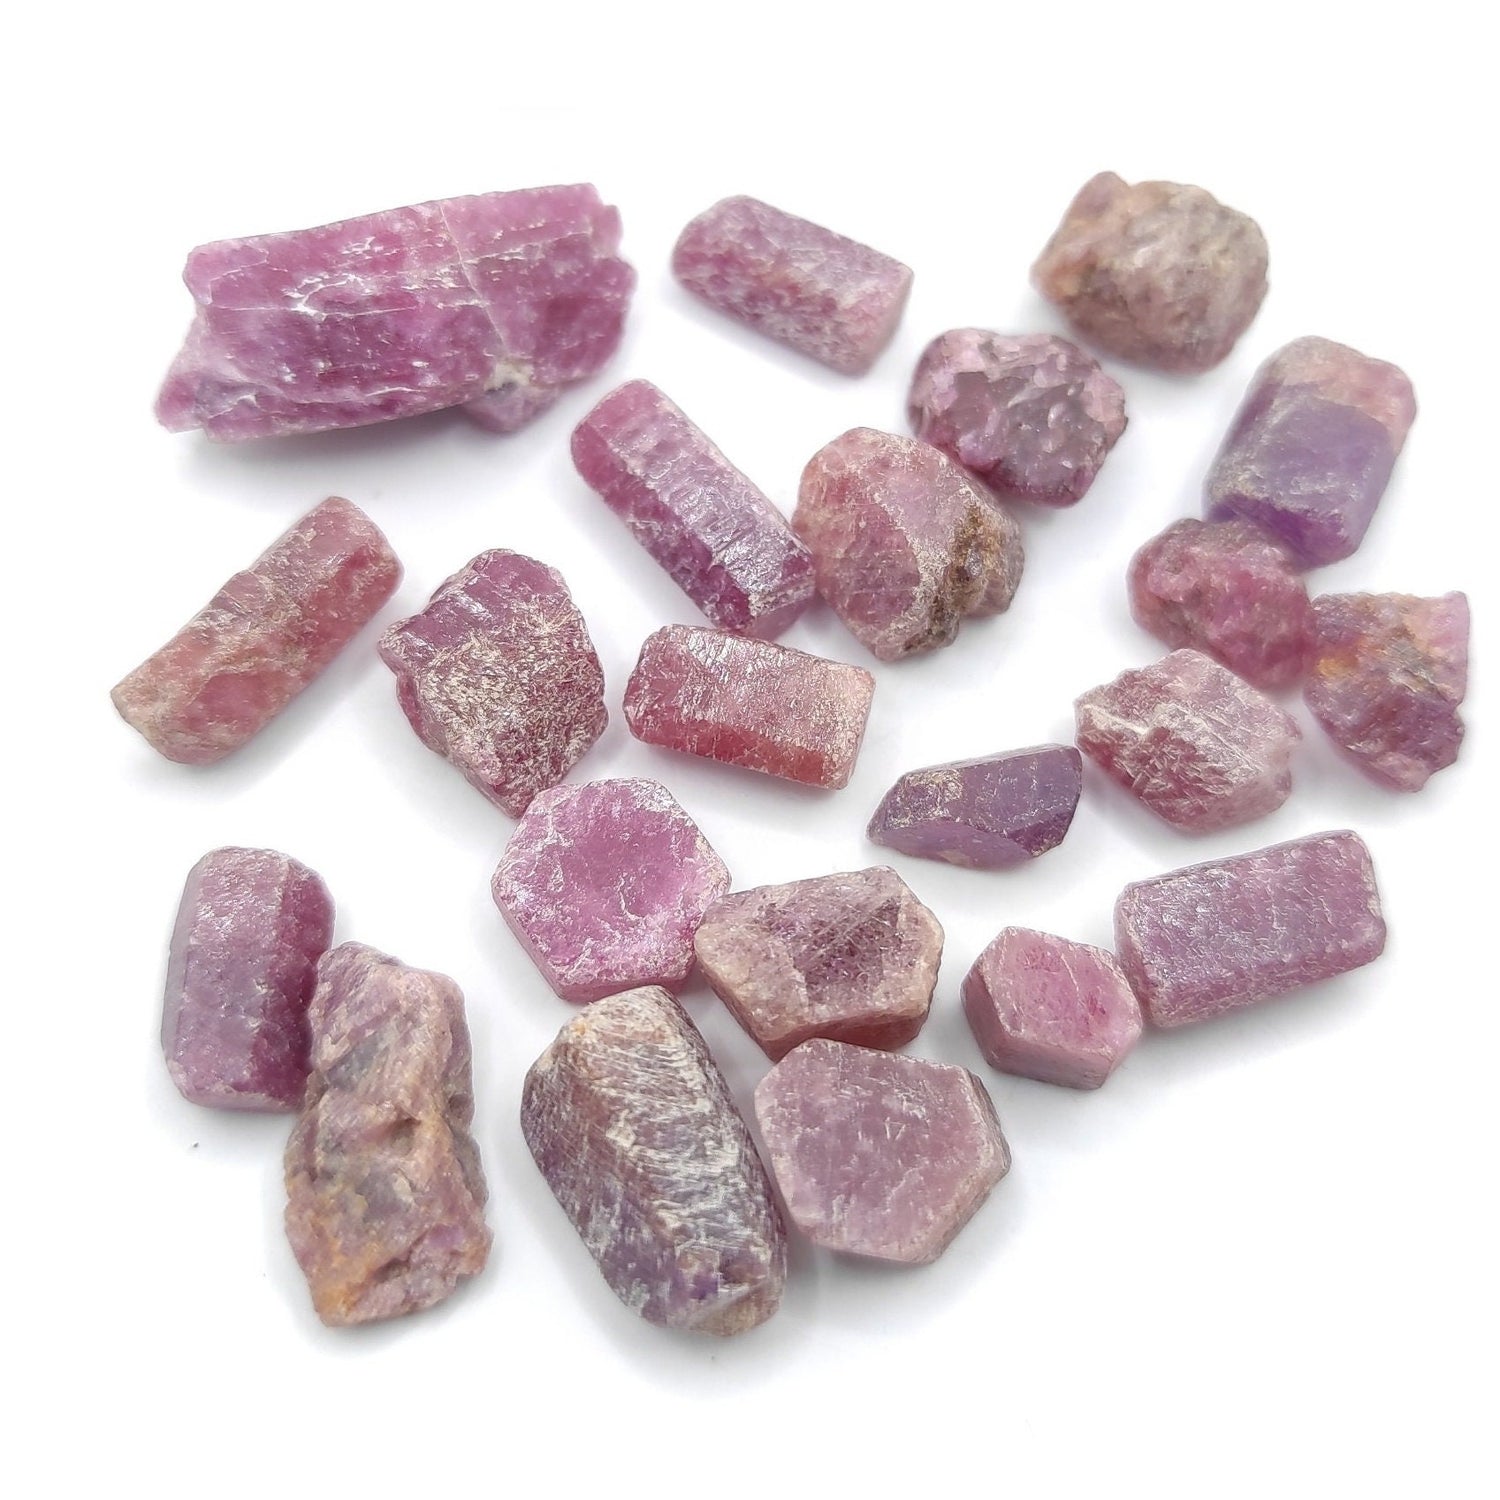 128ct Untreated Ruby Lot - Unheated Ruby Gemstones - Raw Red Ruby from Madagascar - Rough Rubies Gems - Loose Ruby Gemstones - Rough Gems